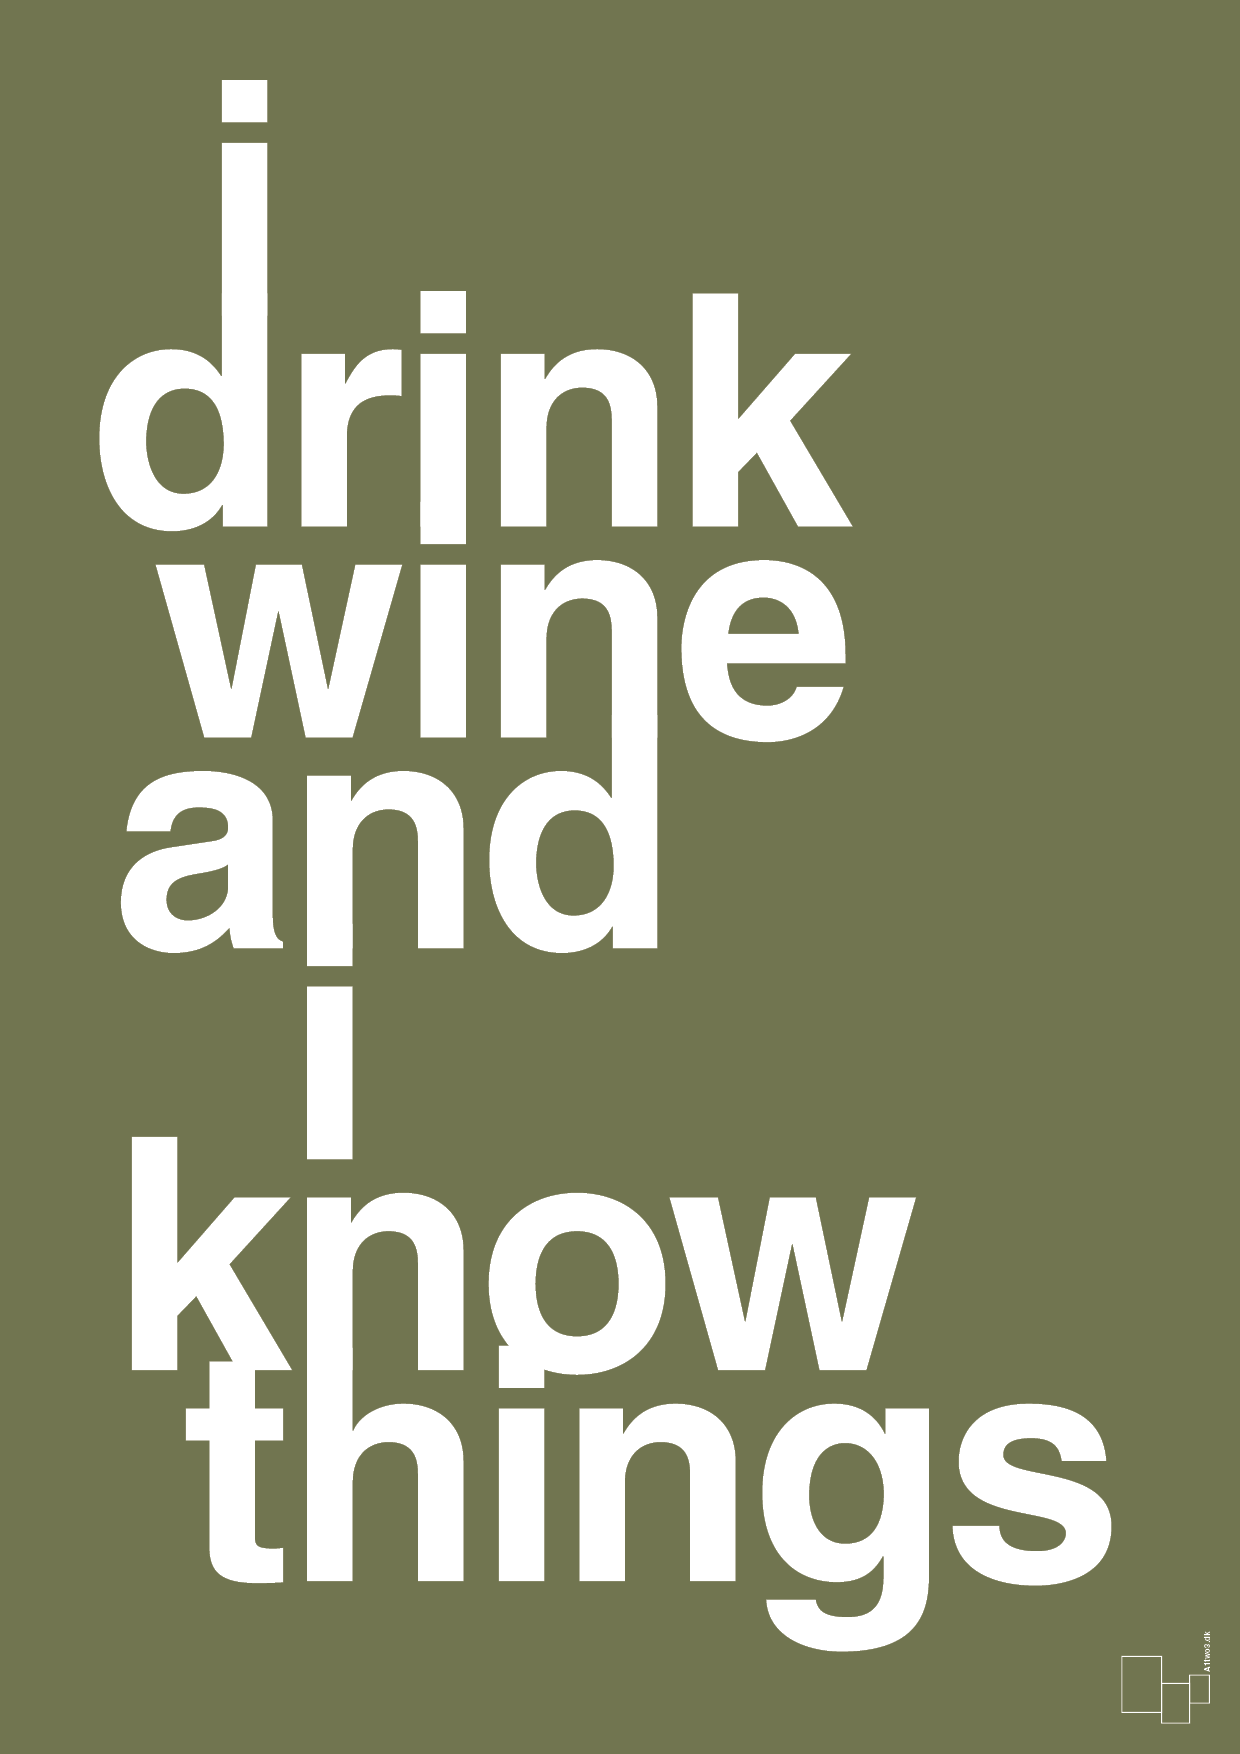 i drink wine and i know things - Plakat med Ordsprog i Secret Meadow